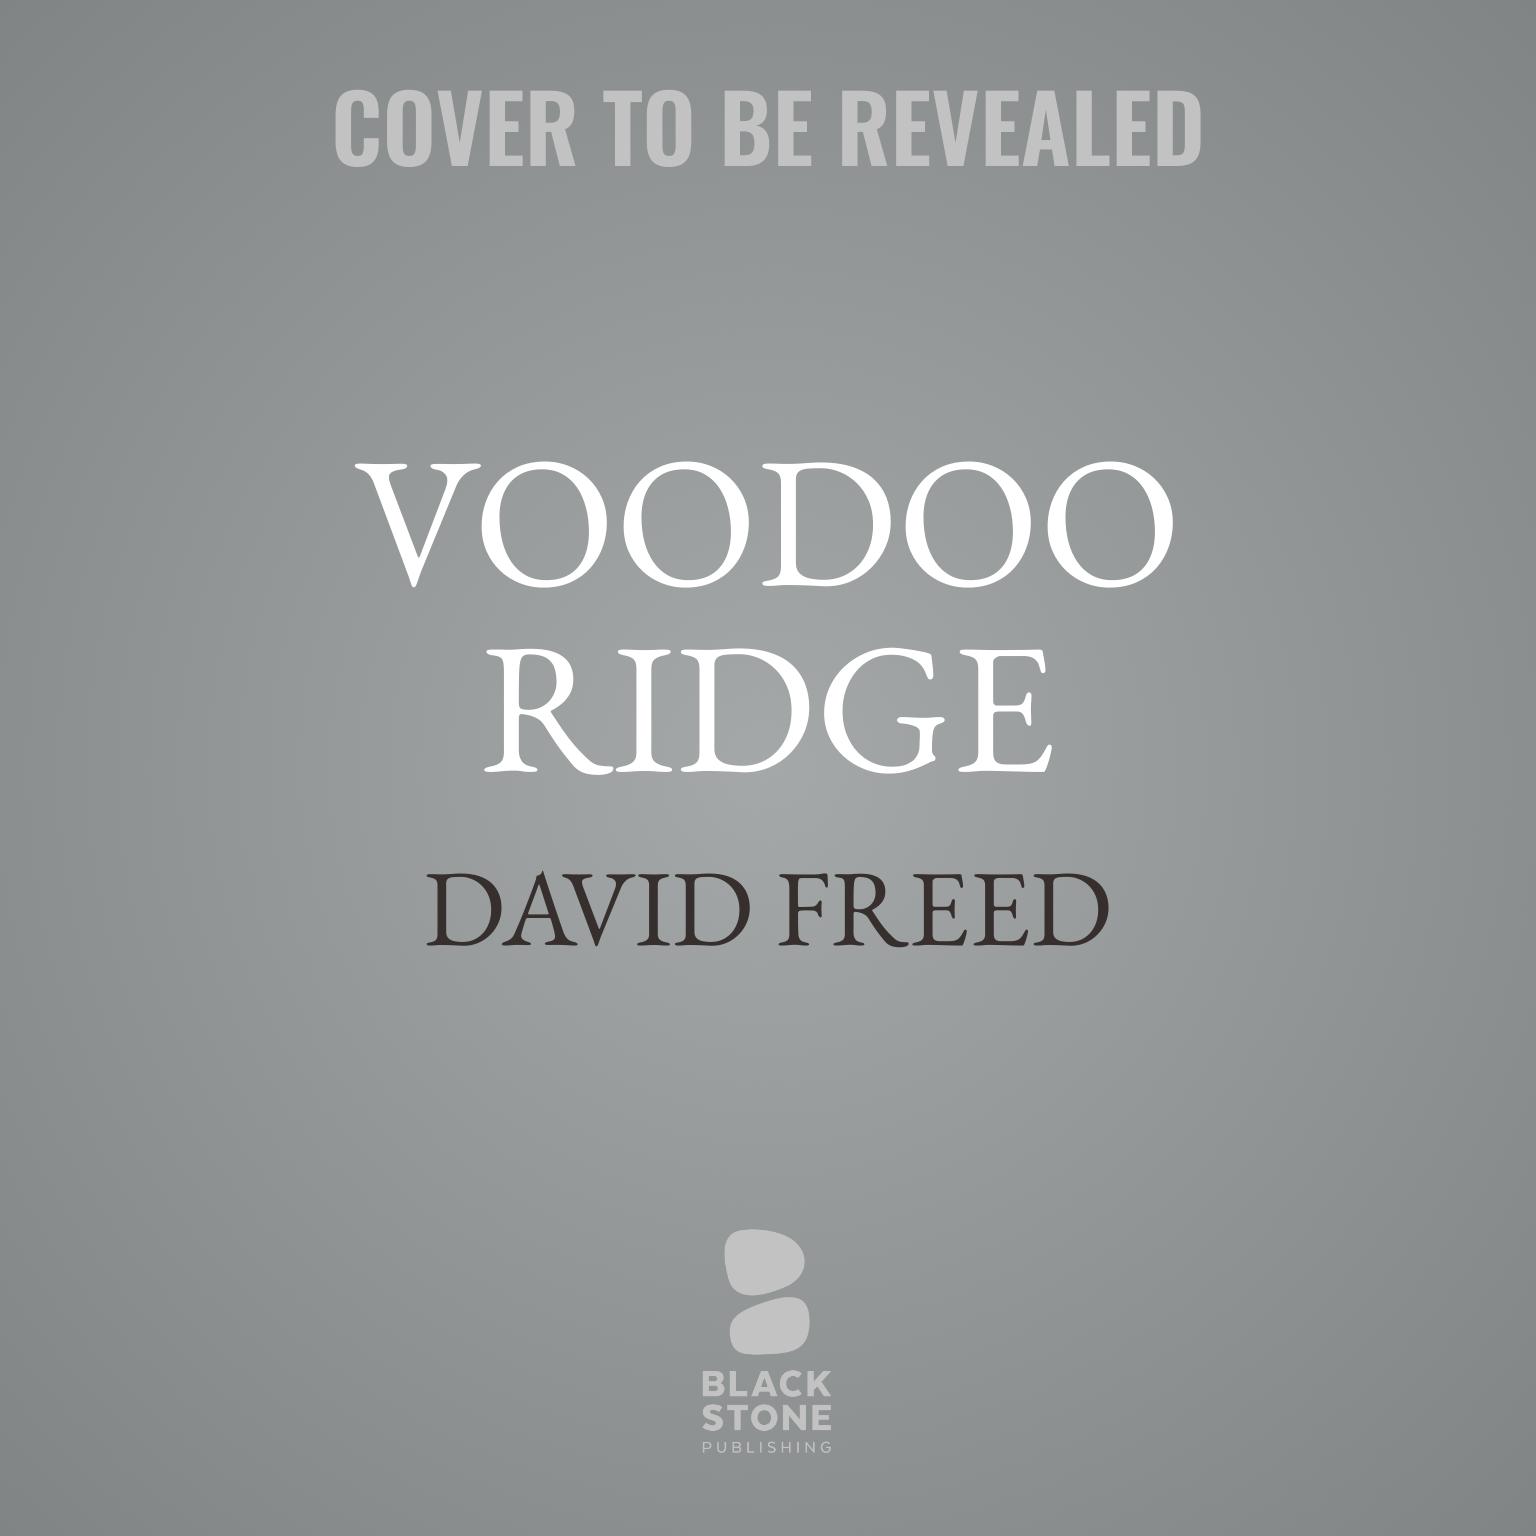 Voodoo Ridge: A Cordell Logan Mystery Audiobook, by David Freed